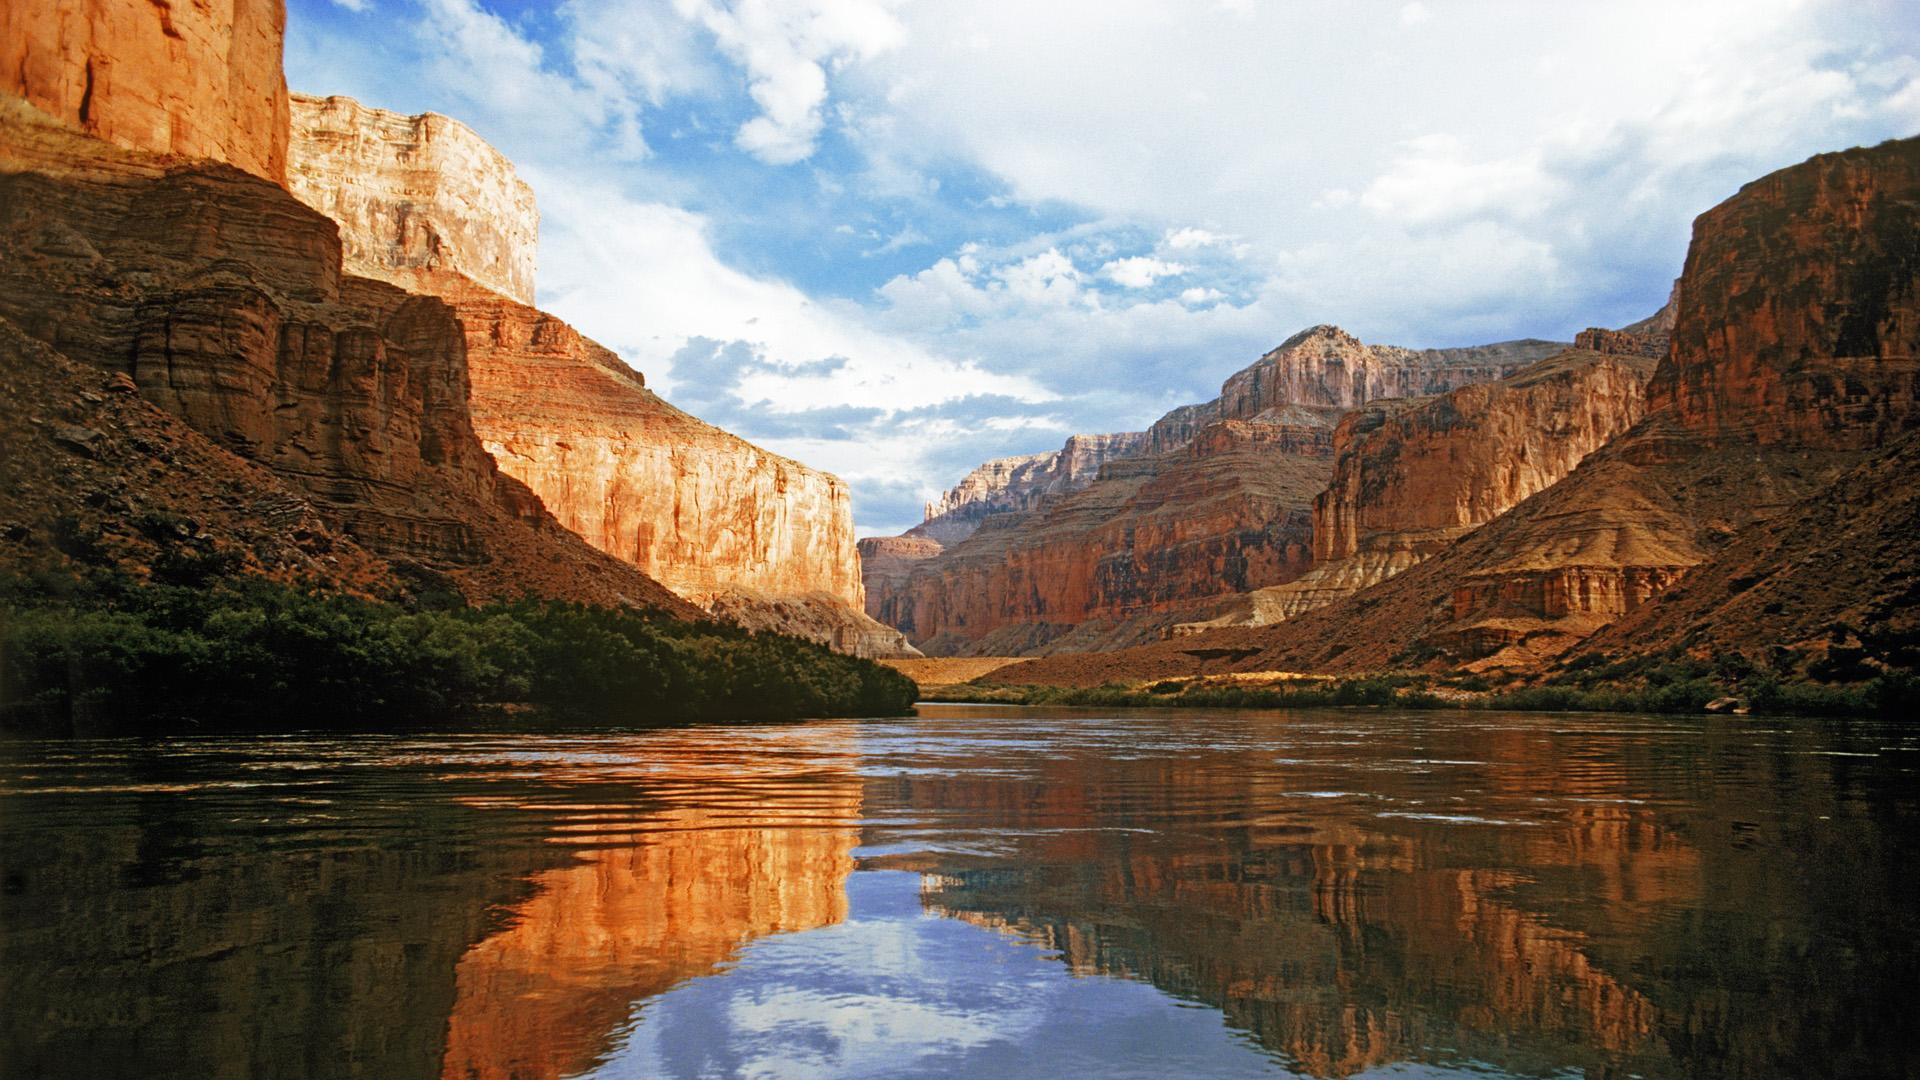 Colorado River, Gr Canyon National Park, Arizona, body of water between brown mountains